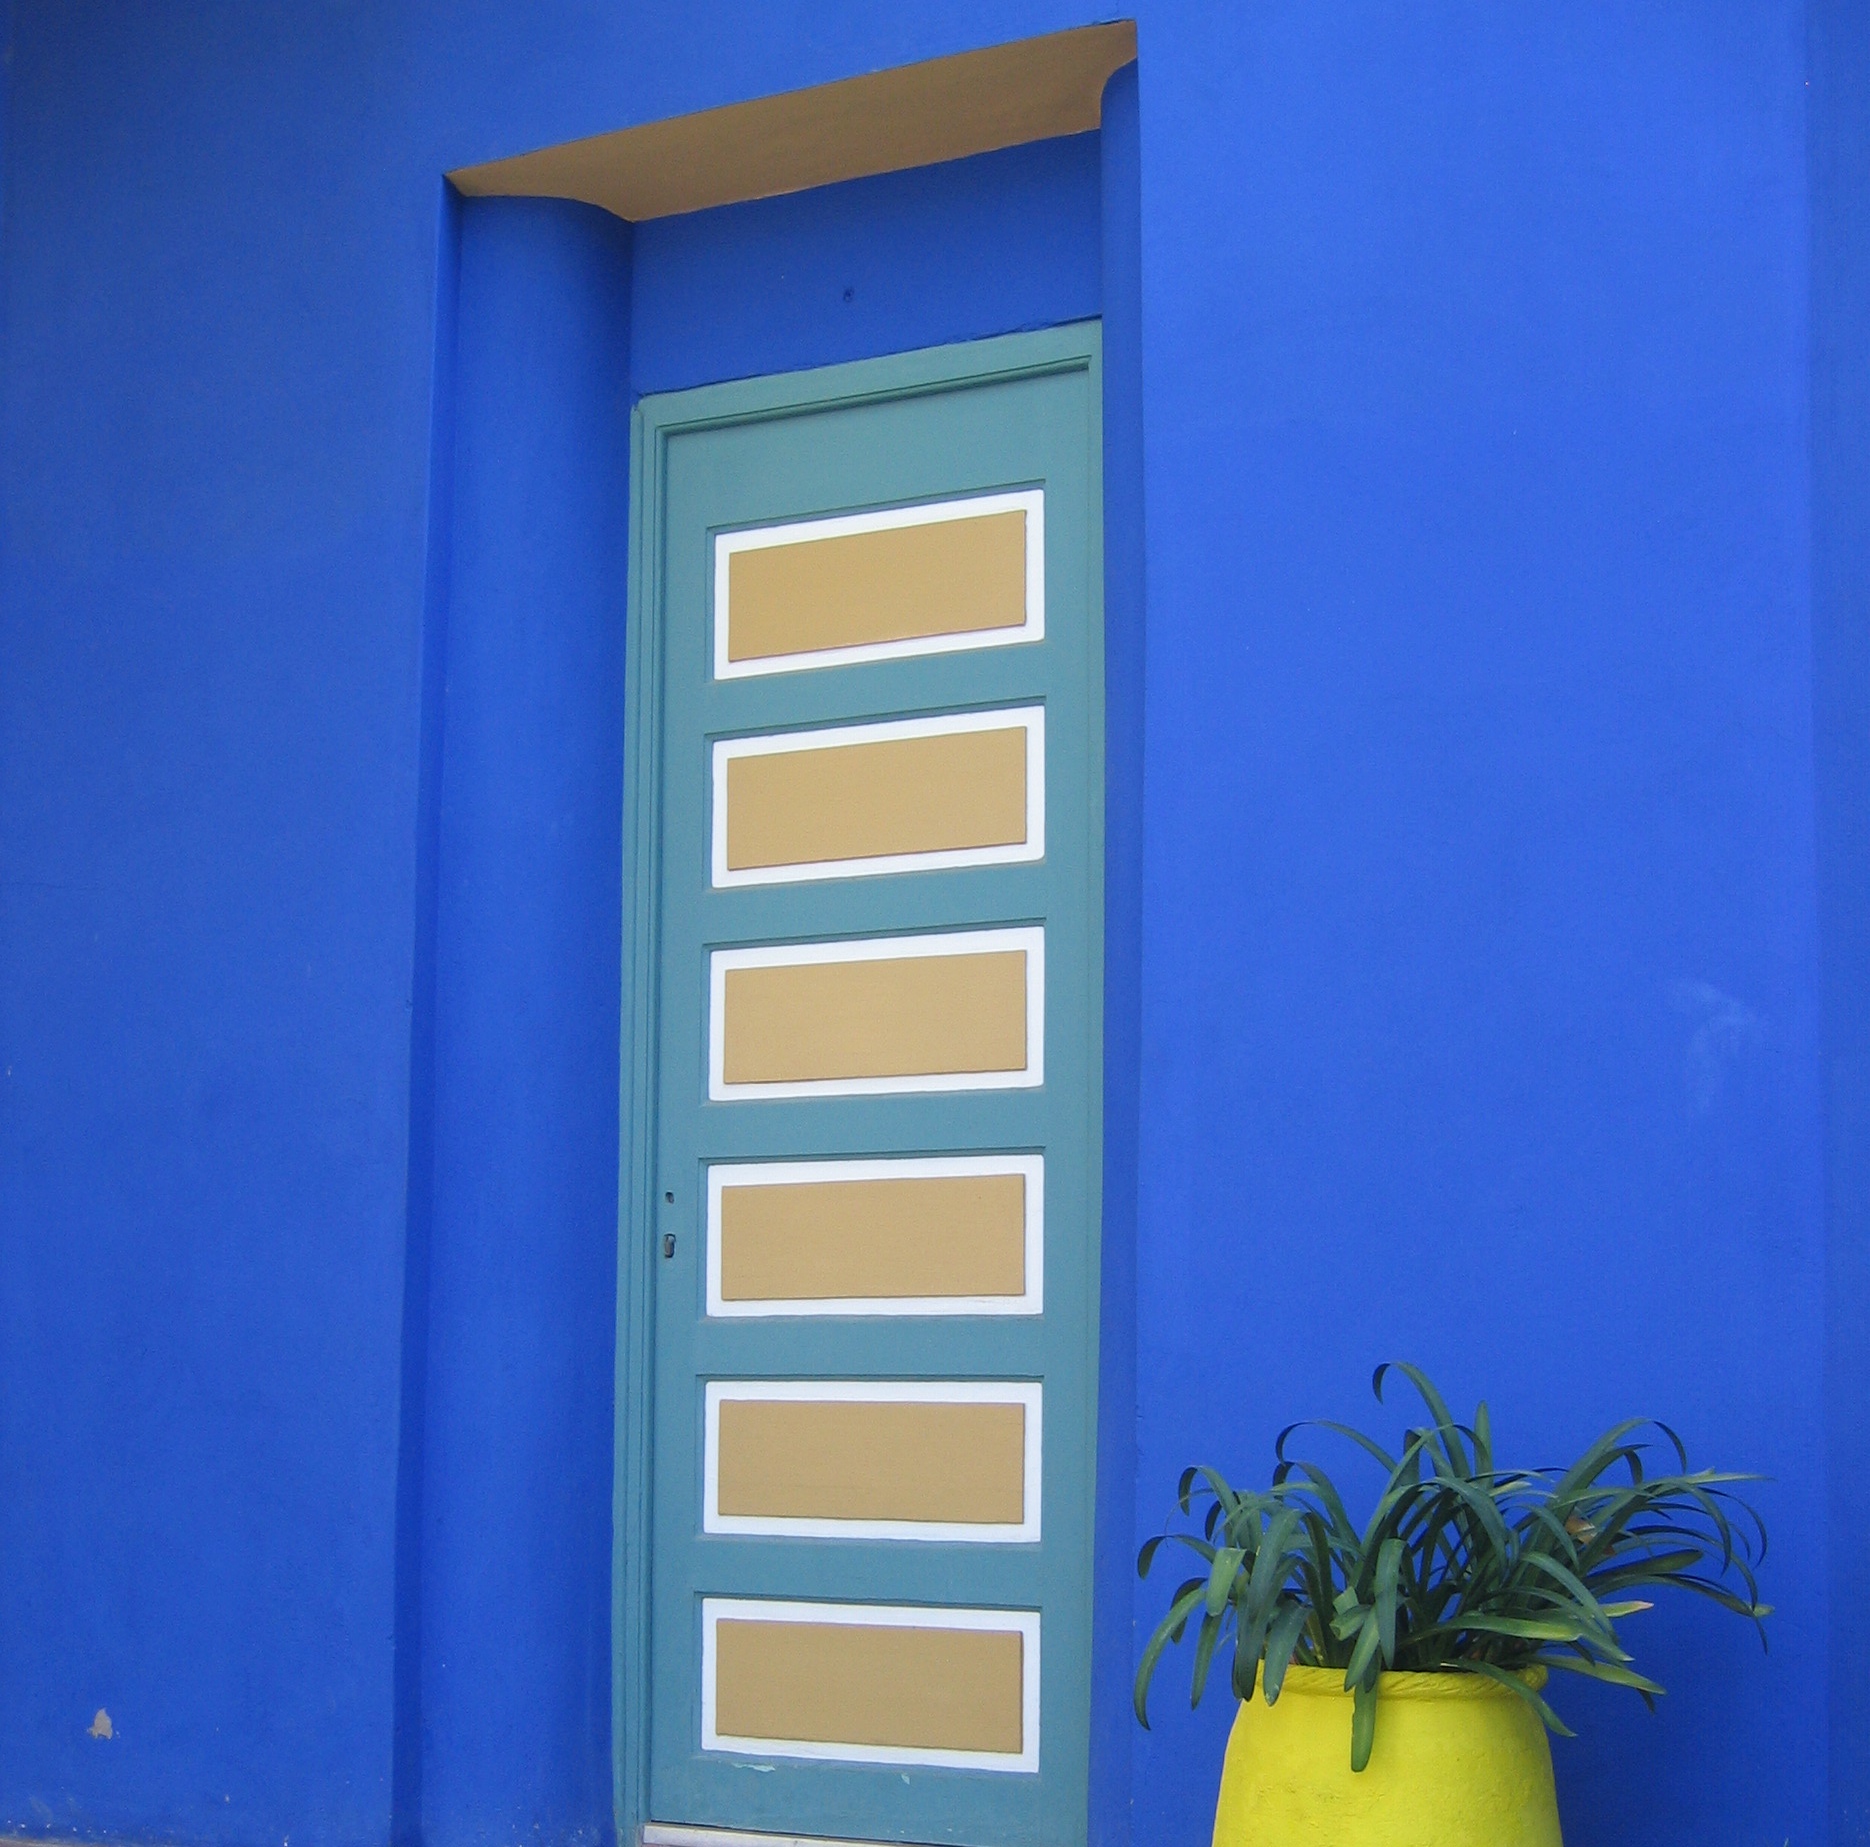 Yves Saint-Laurent’s blue heaven in Morocco